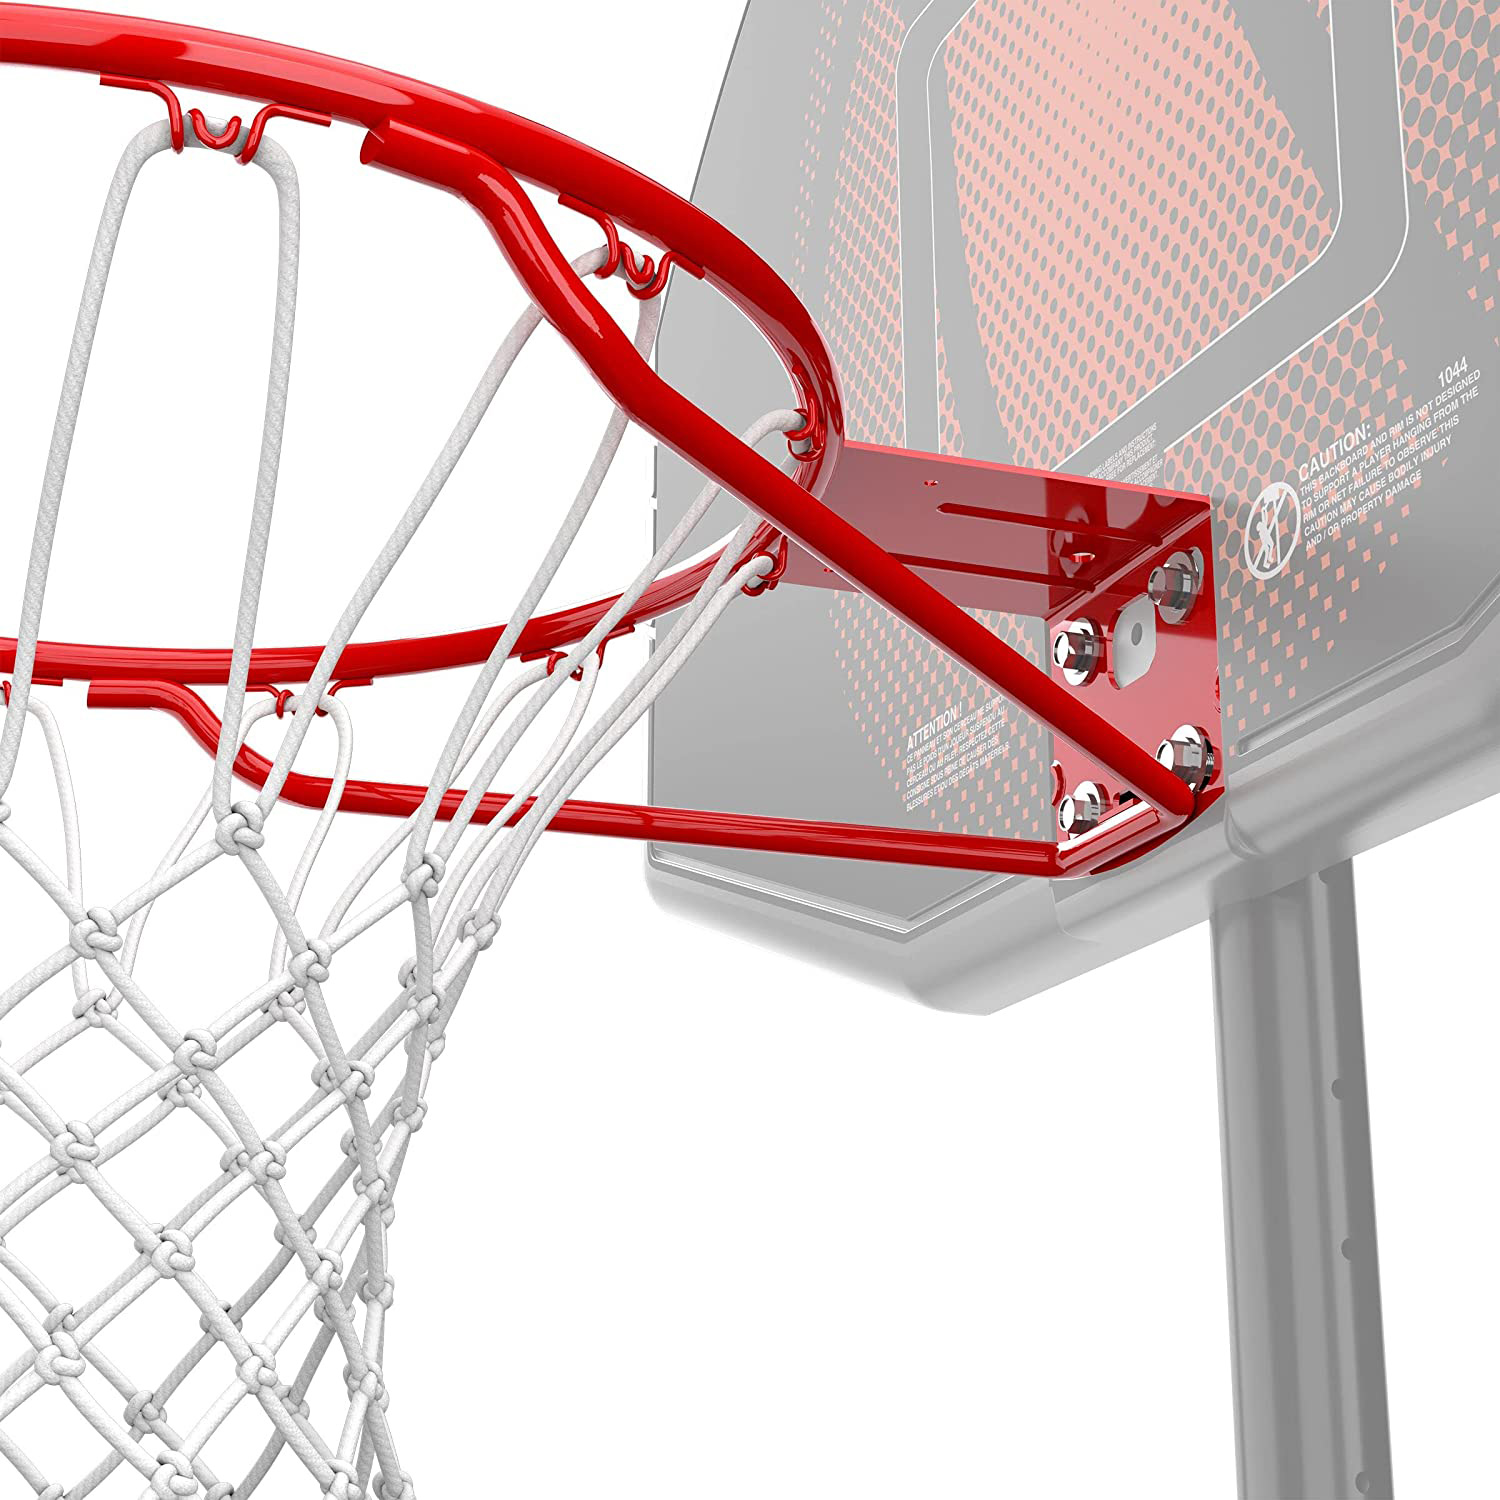 Spalding Standard basketball ring red